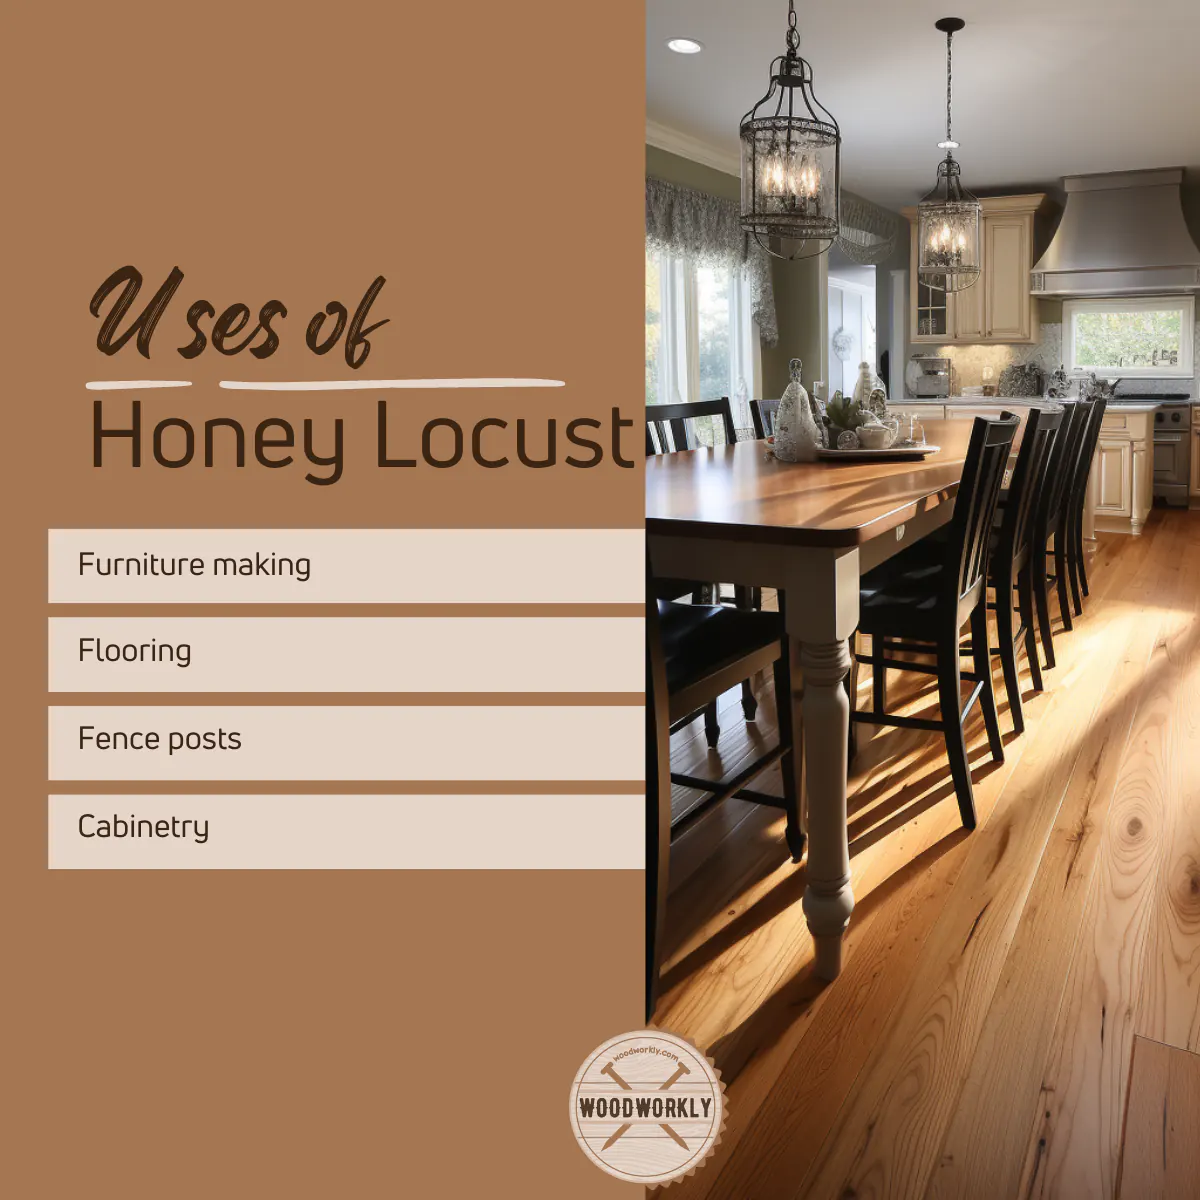 Uses of Honey Locust